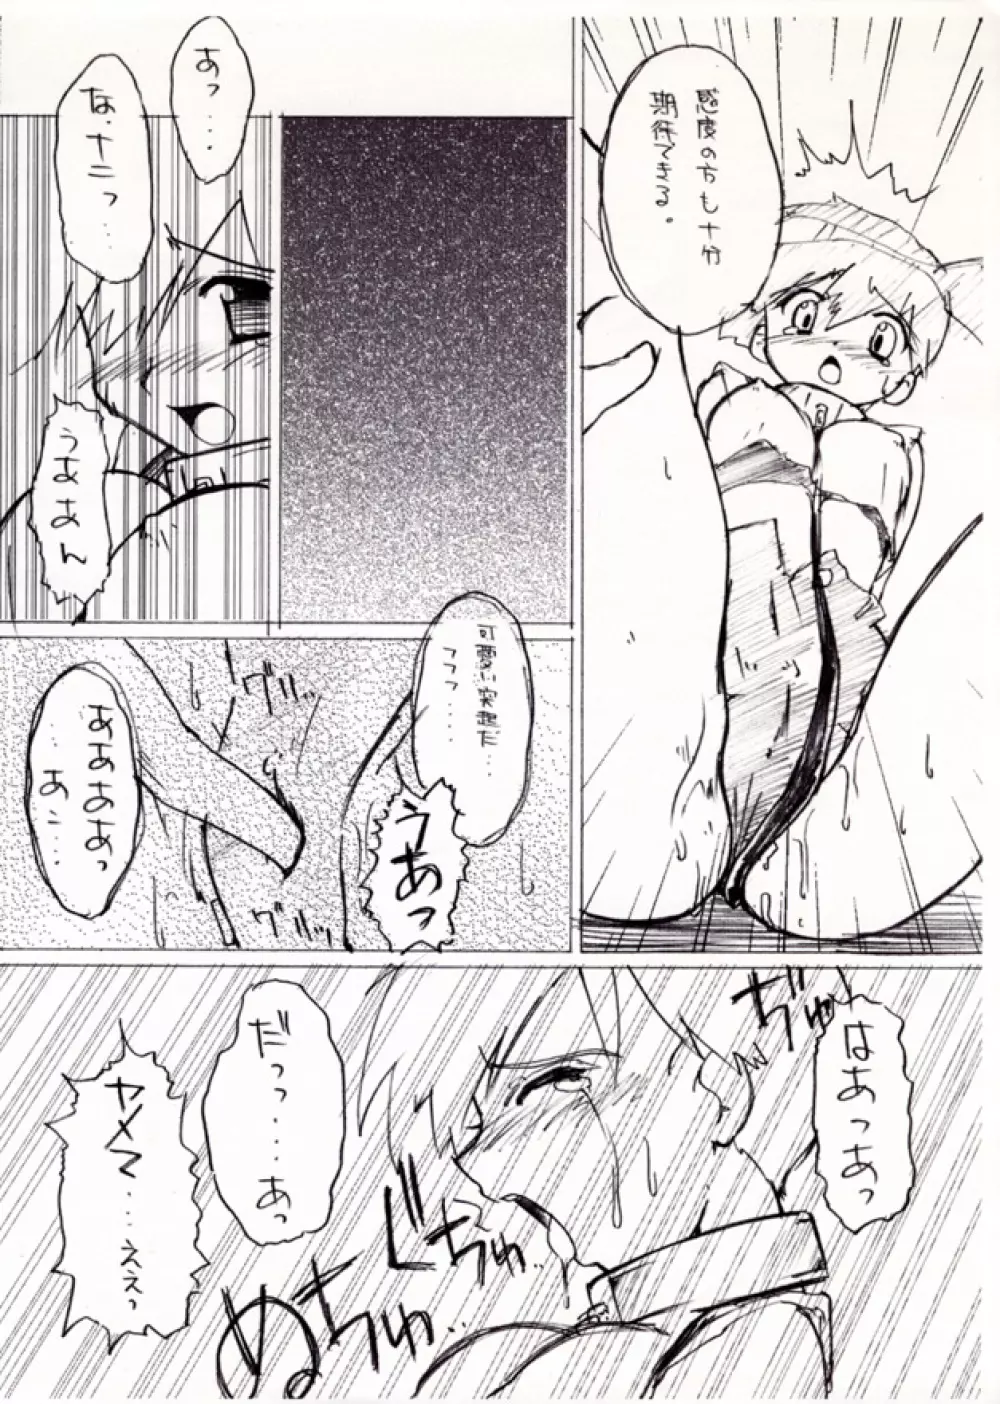 KASUMIX XPLOSION Kasumi Comic part5 - page16